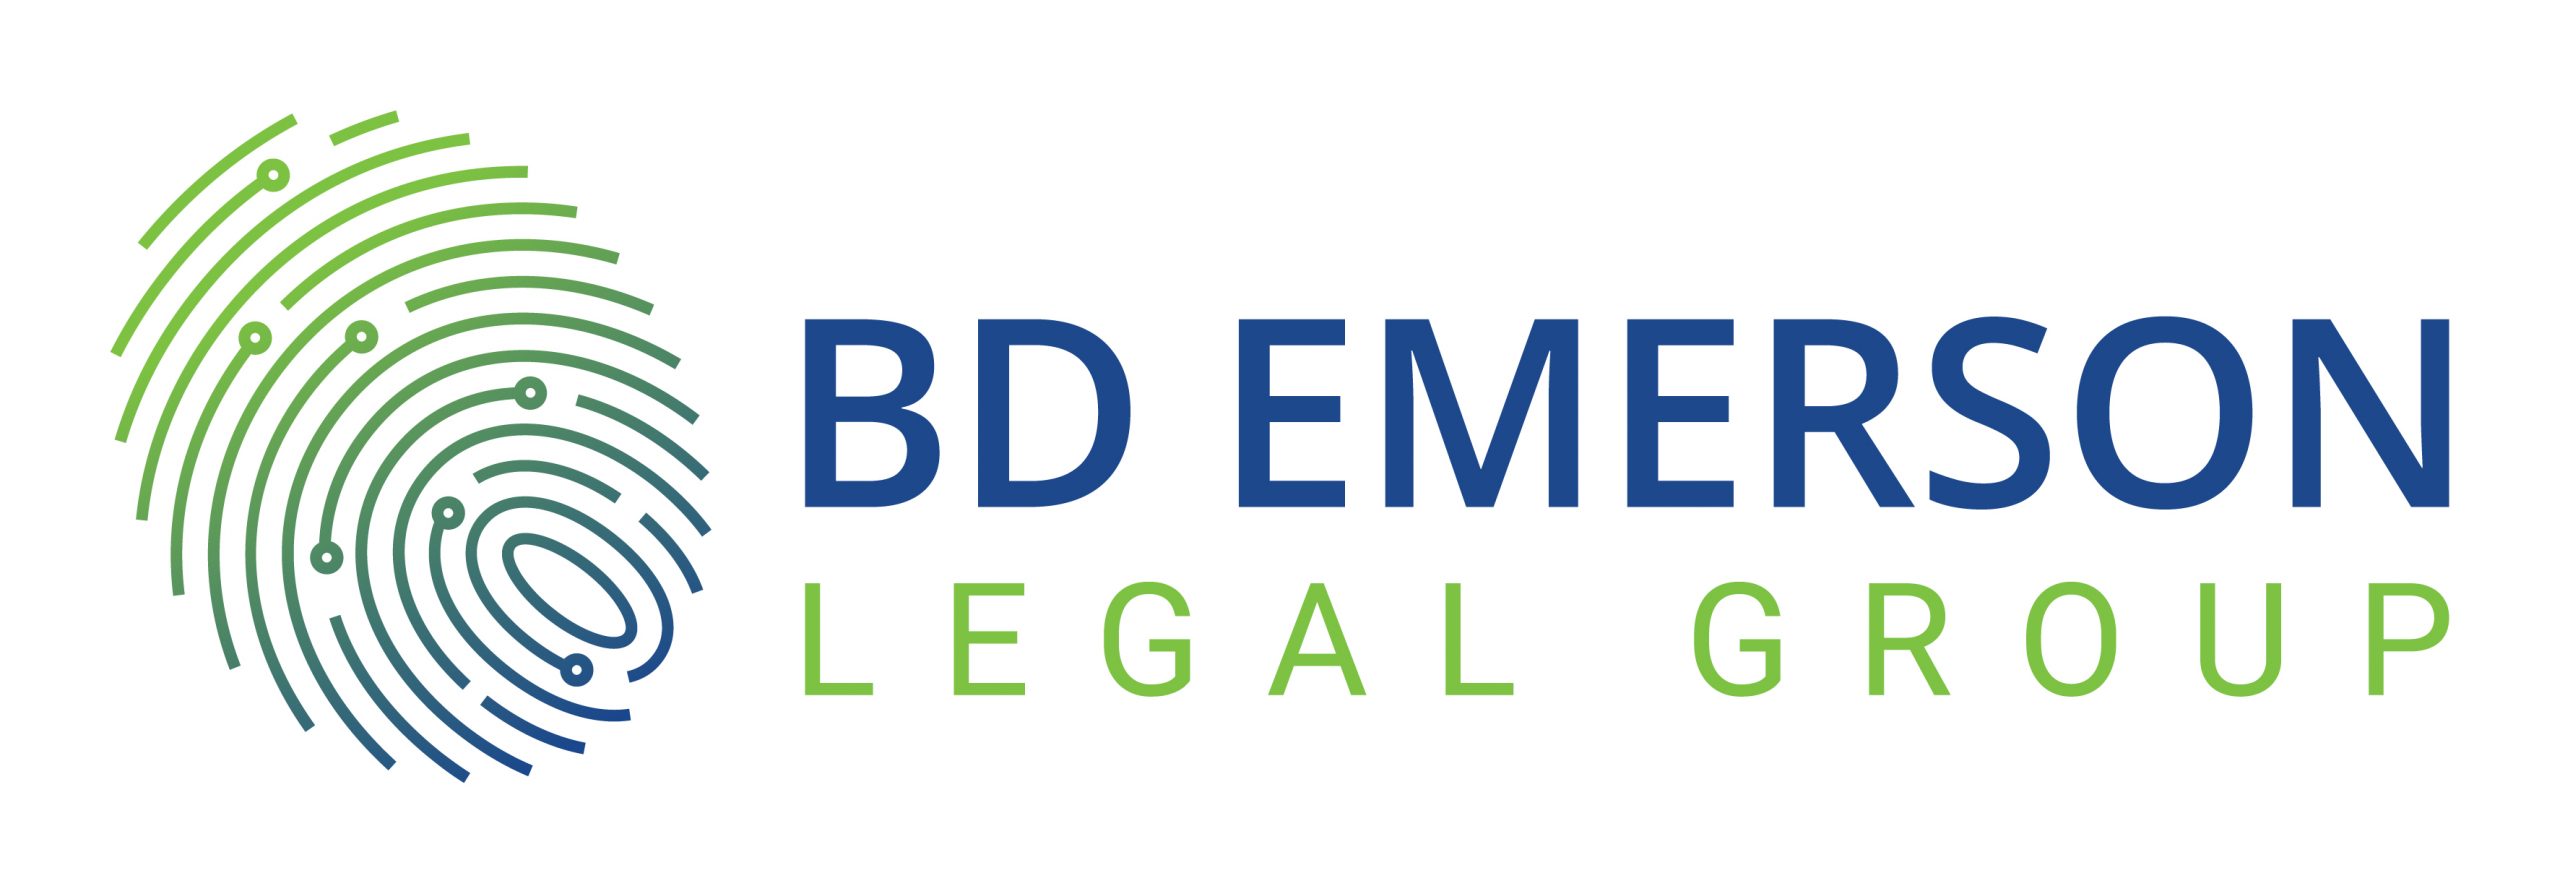 bd emerson law logo"